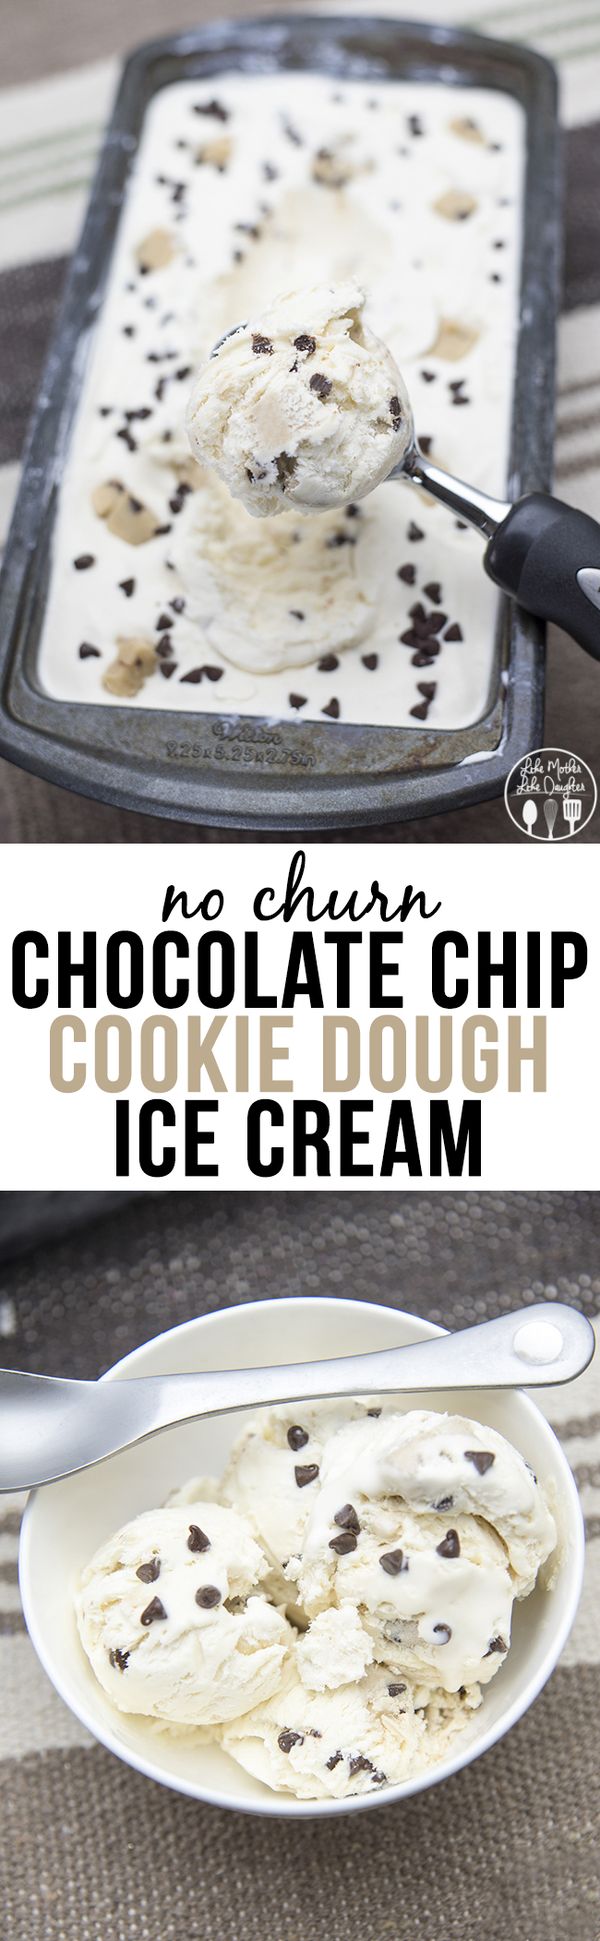 No Churn Chocolate Chip Cookie Dough Ice Cream